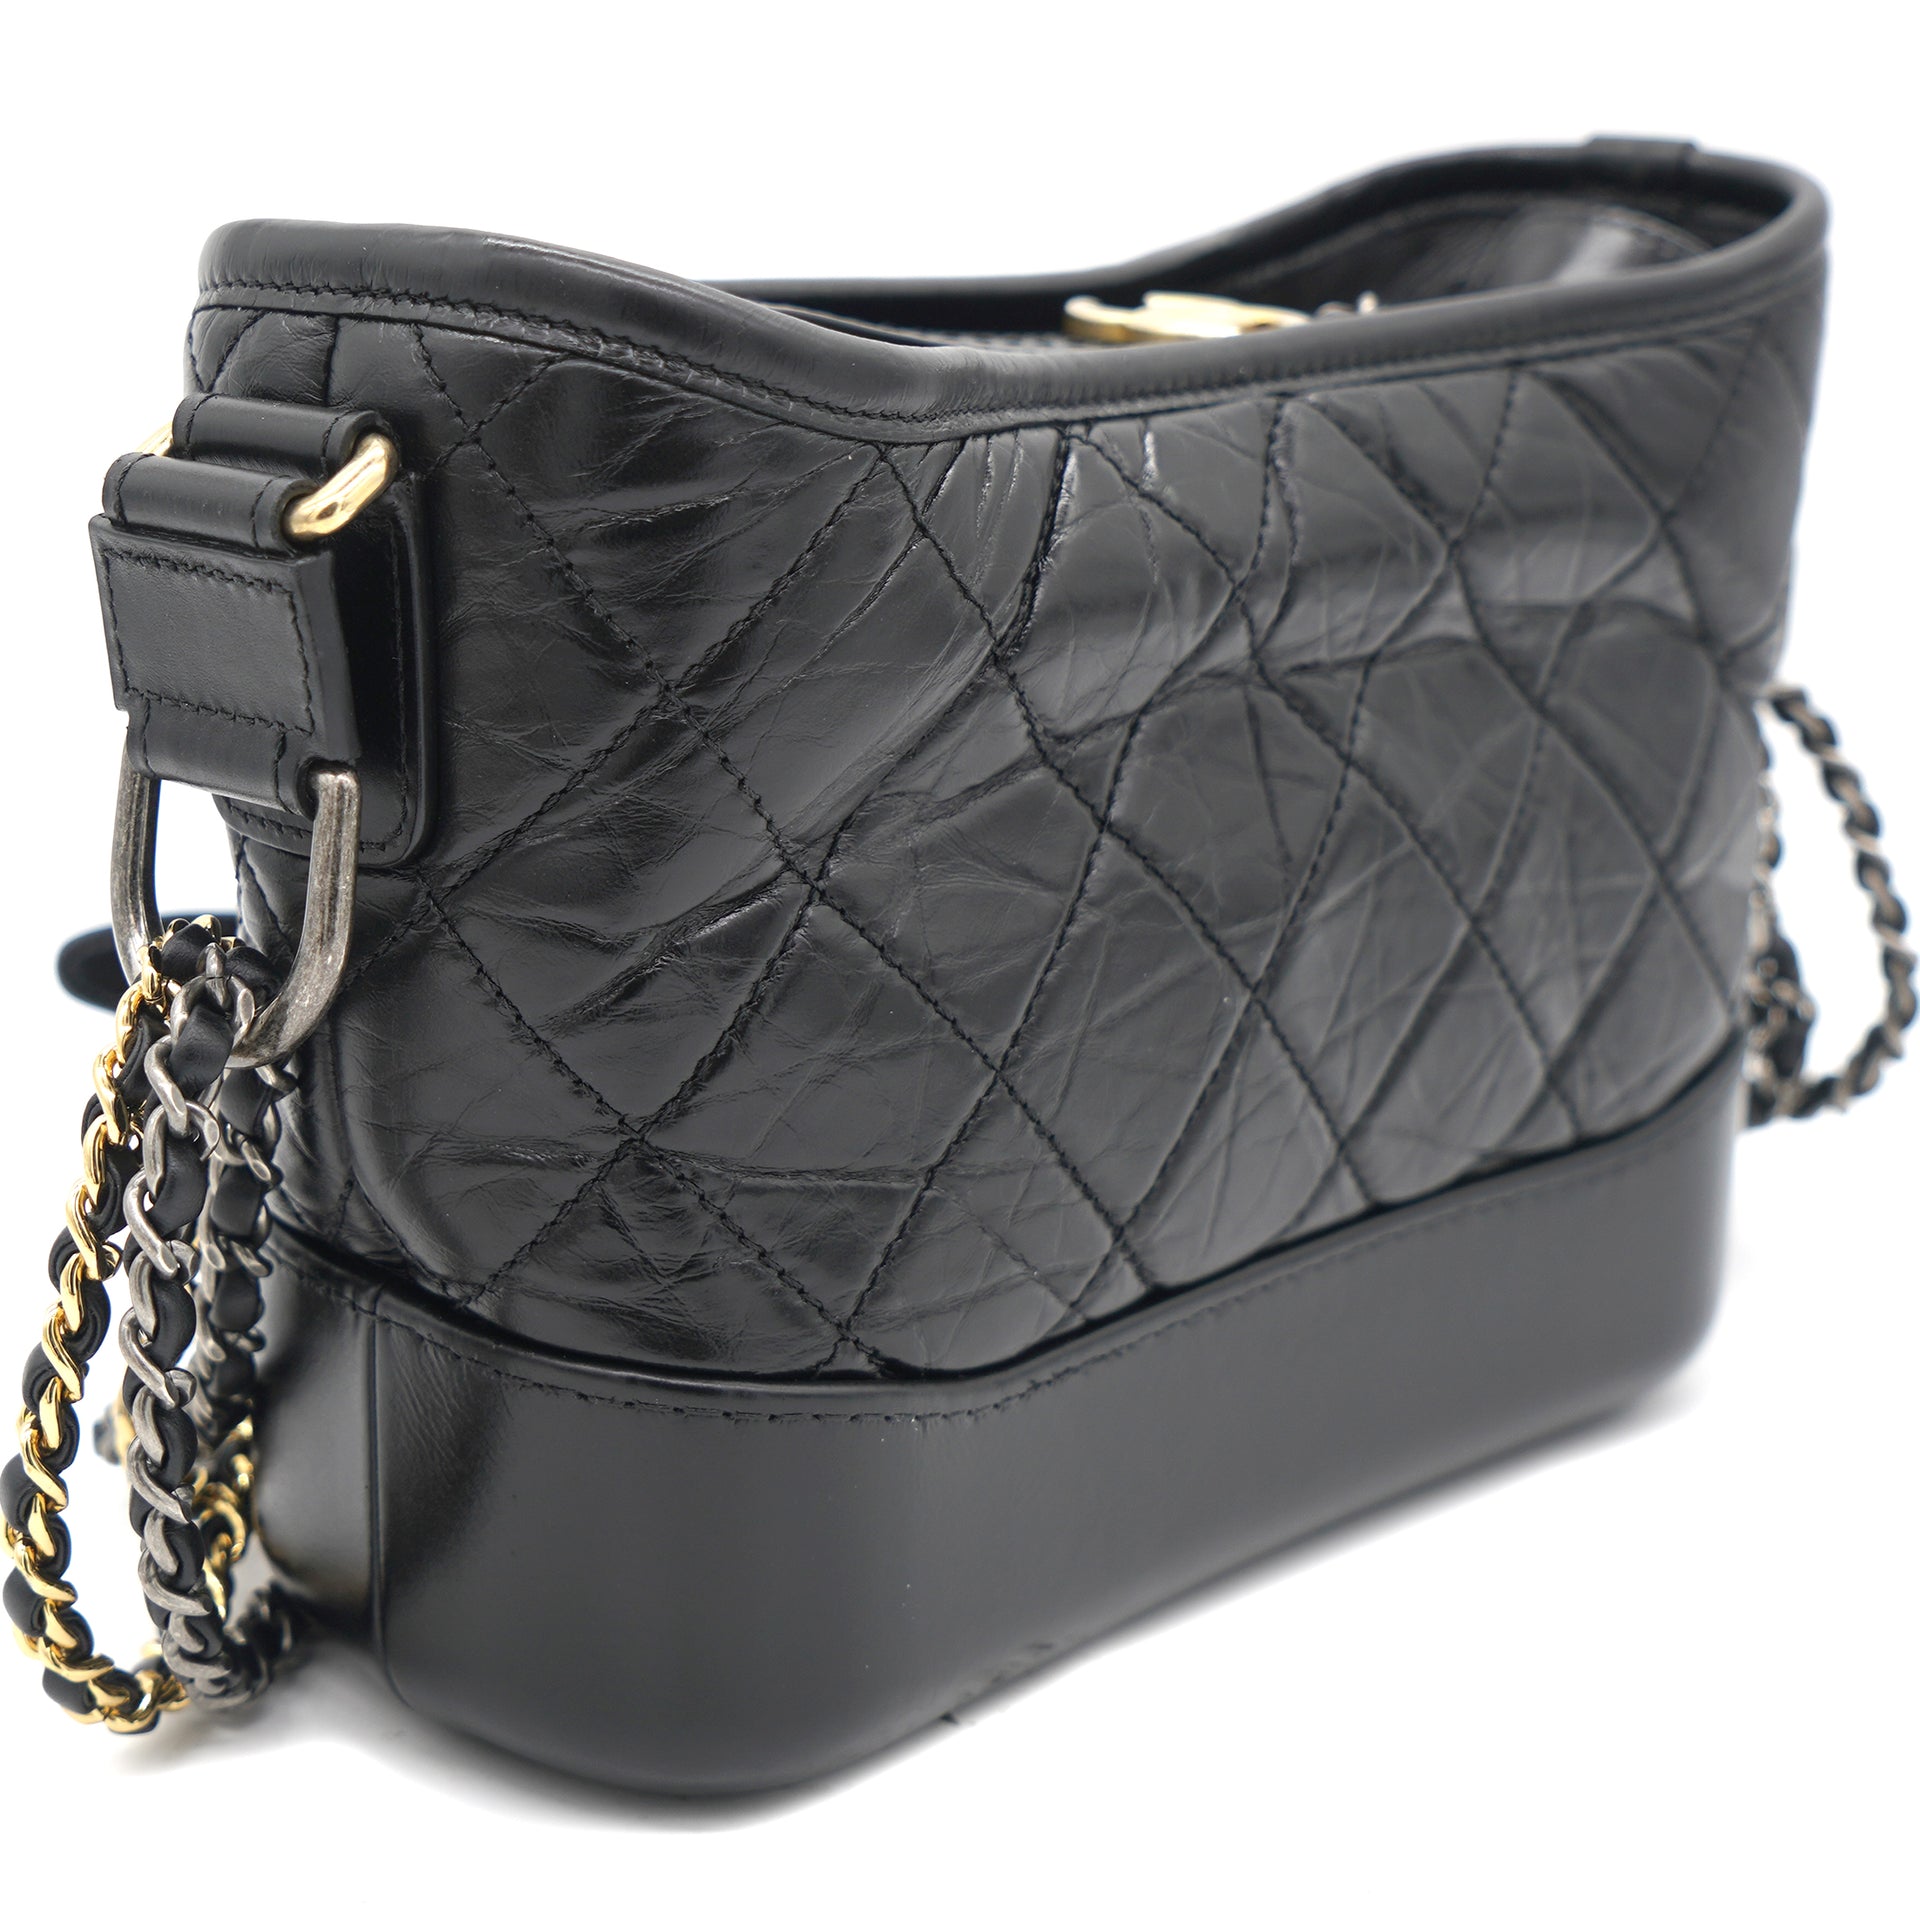 Chanel Gabrielle Small Hobo Bag Black Aged Calfskin Smooth Calfskin | eBay